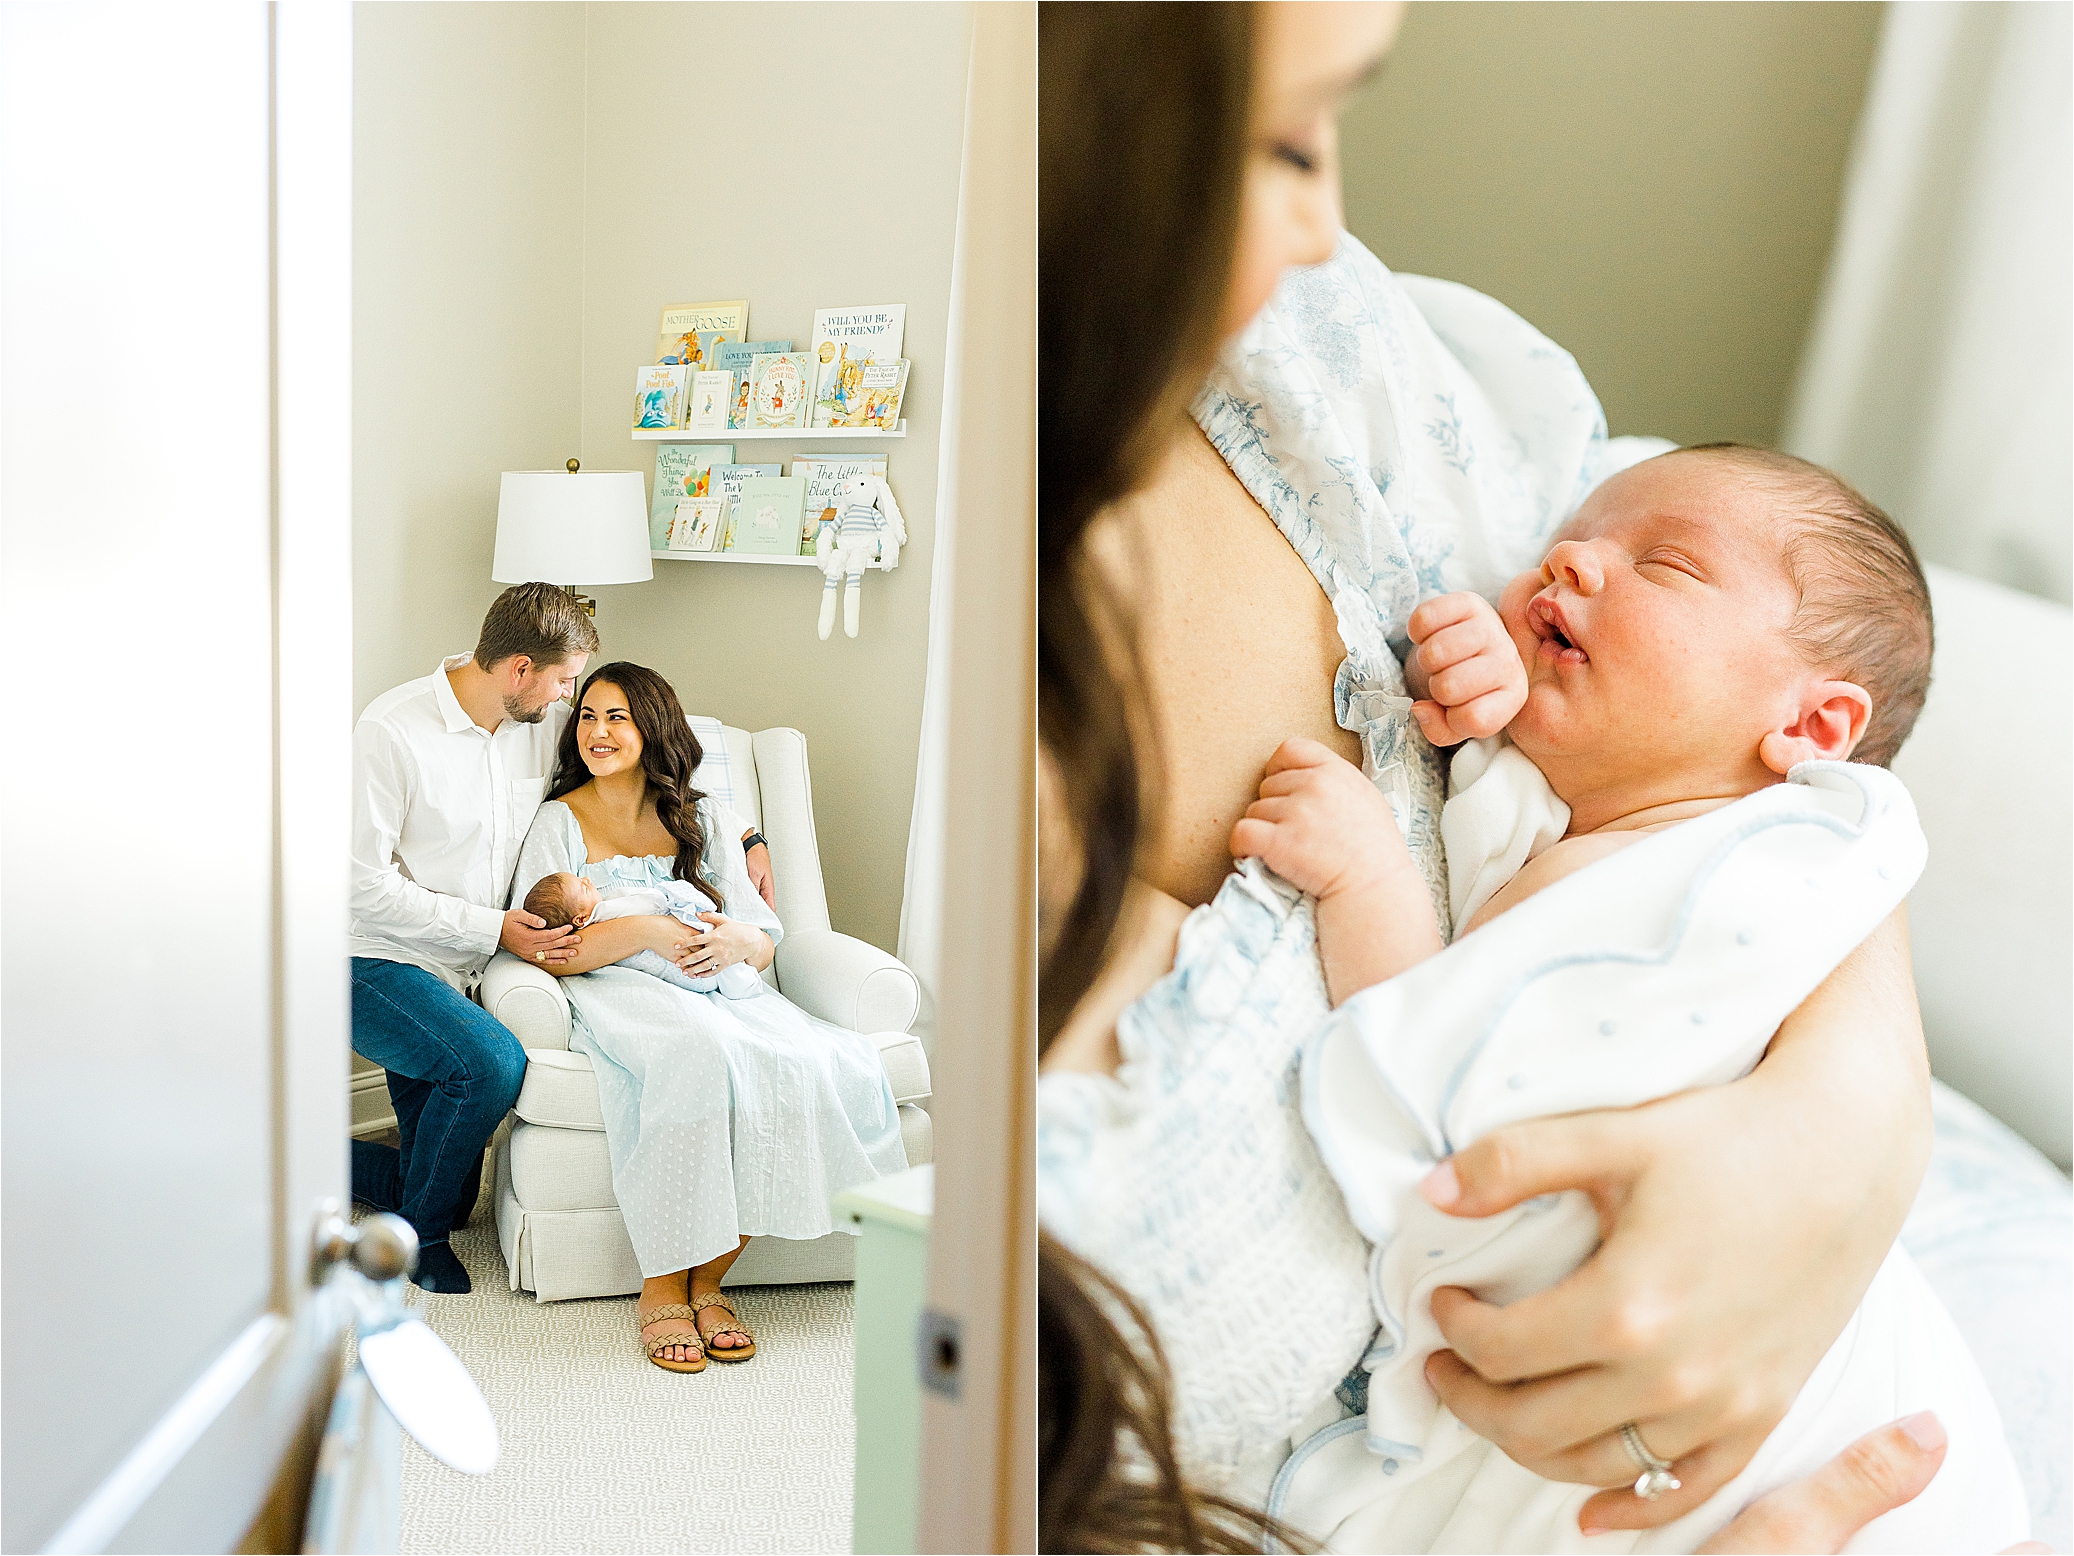 San Antonio Newborn photographer peeks into the nursery as new parents sit and cuddle their newborn baby boy